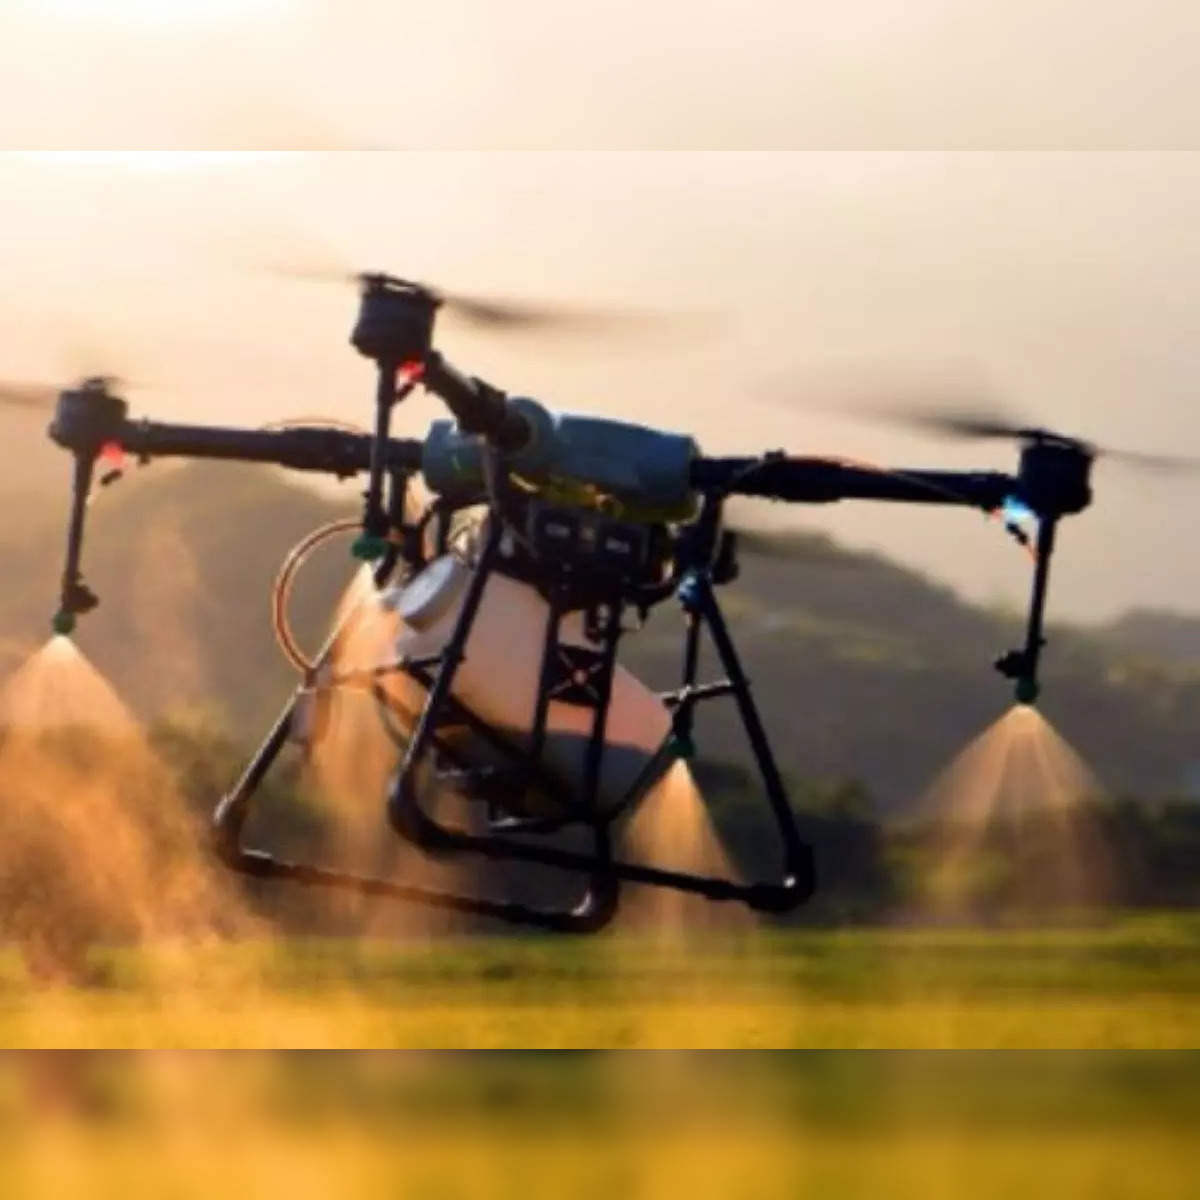 Students' solar-powered drone idea takes flight